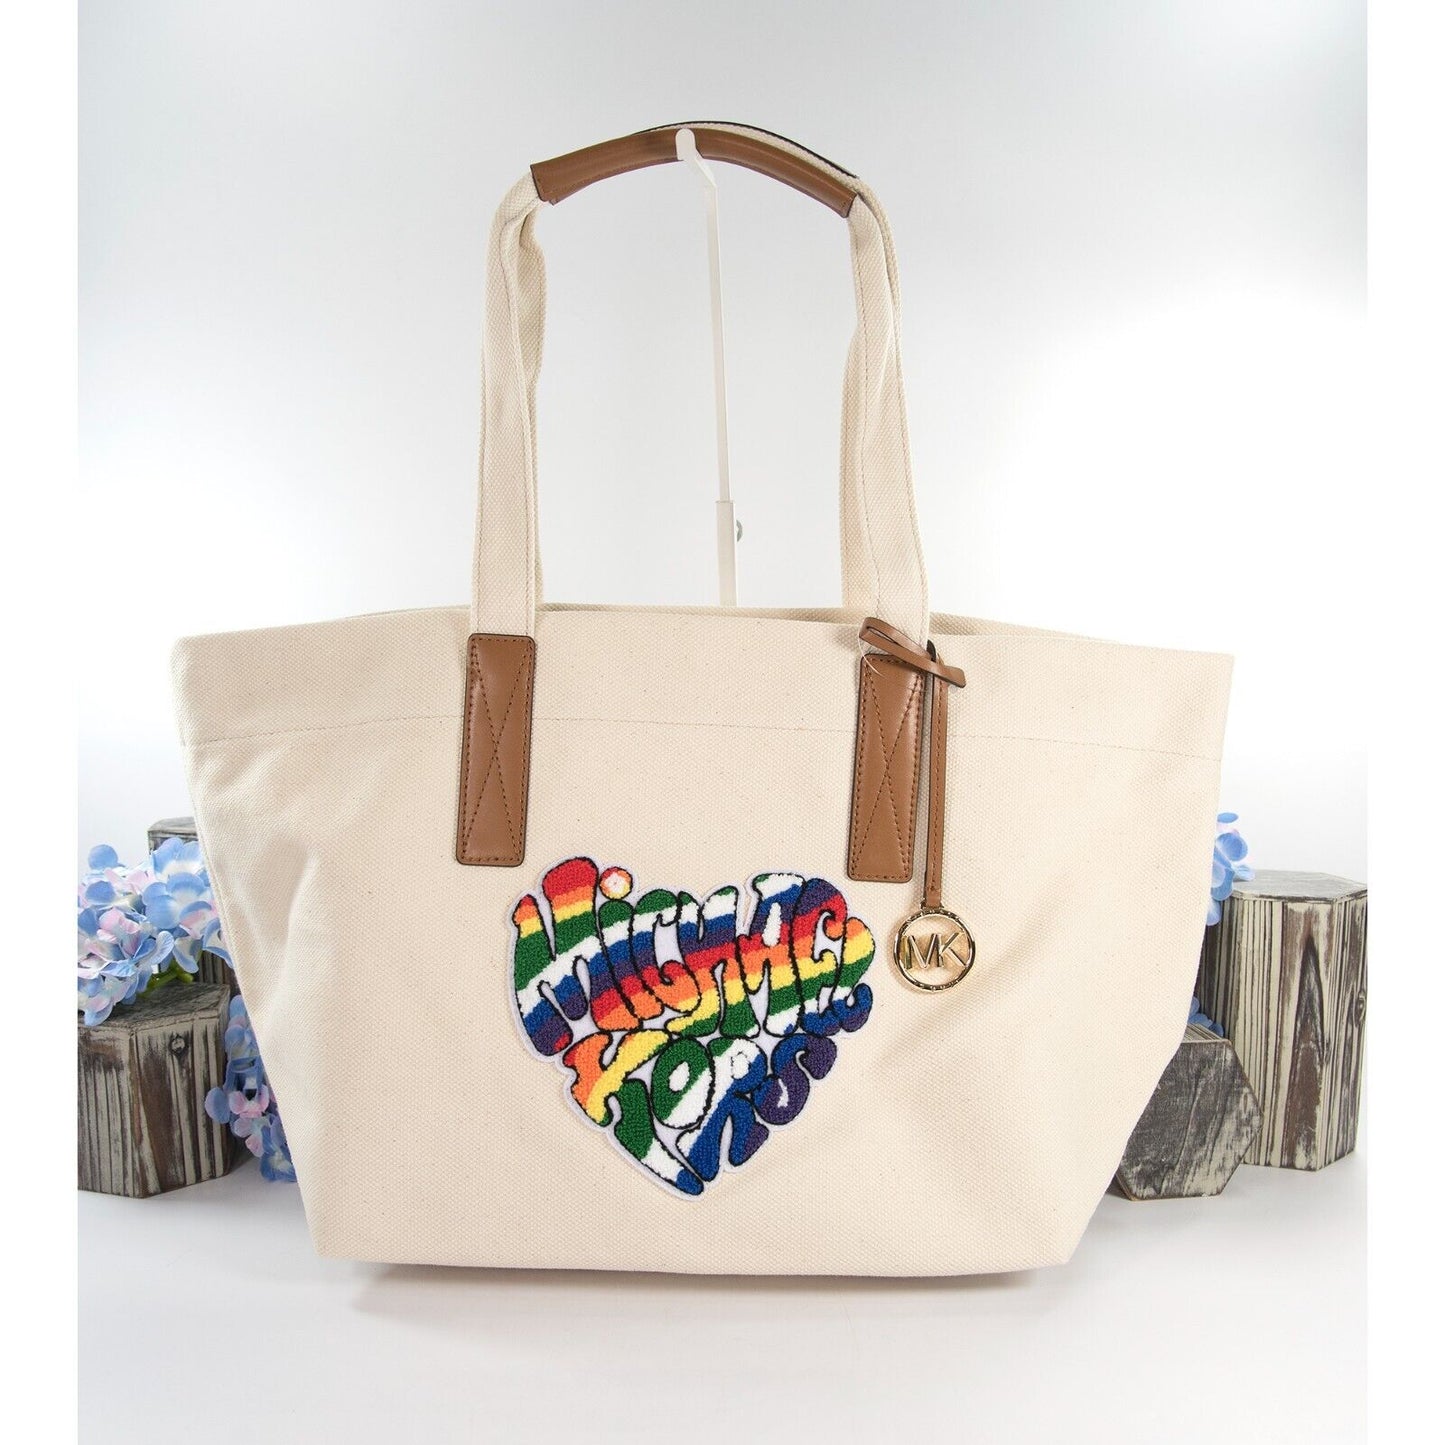 Buy the Michael Kors Tan Canvas Tote Bag